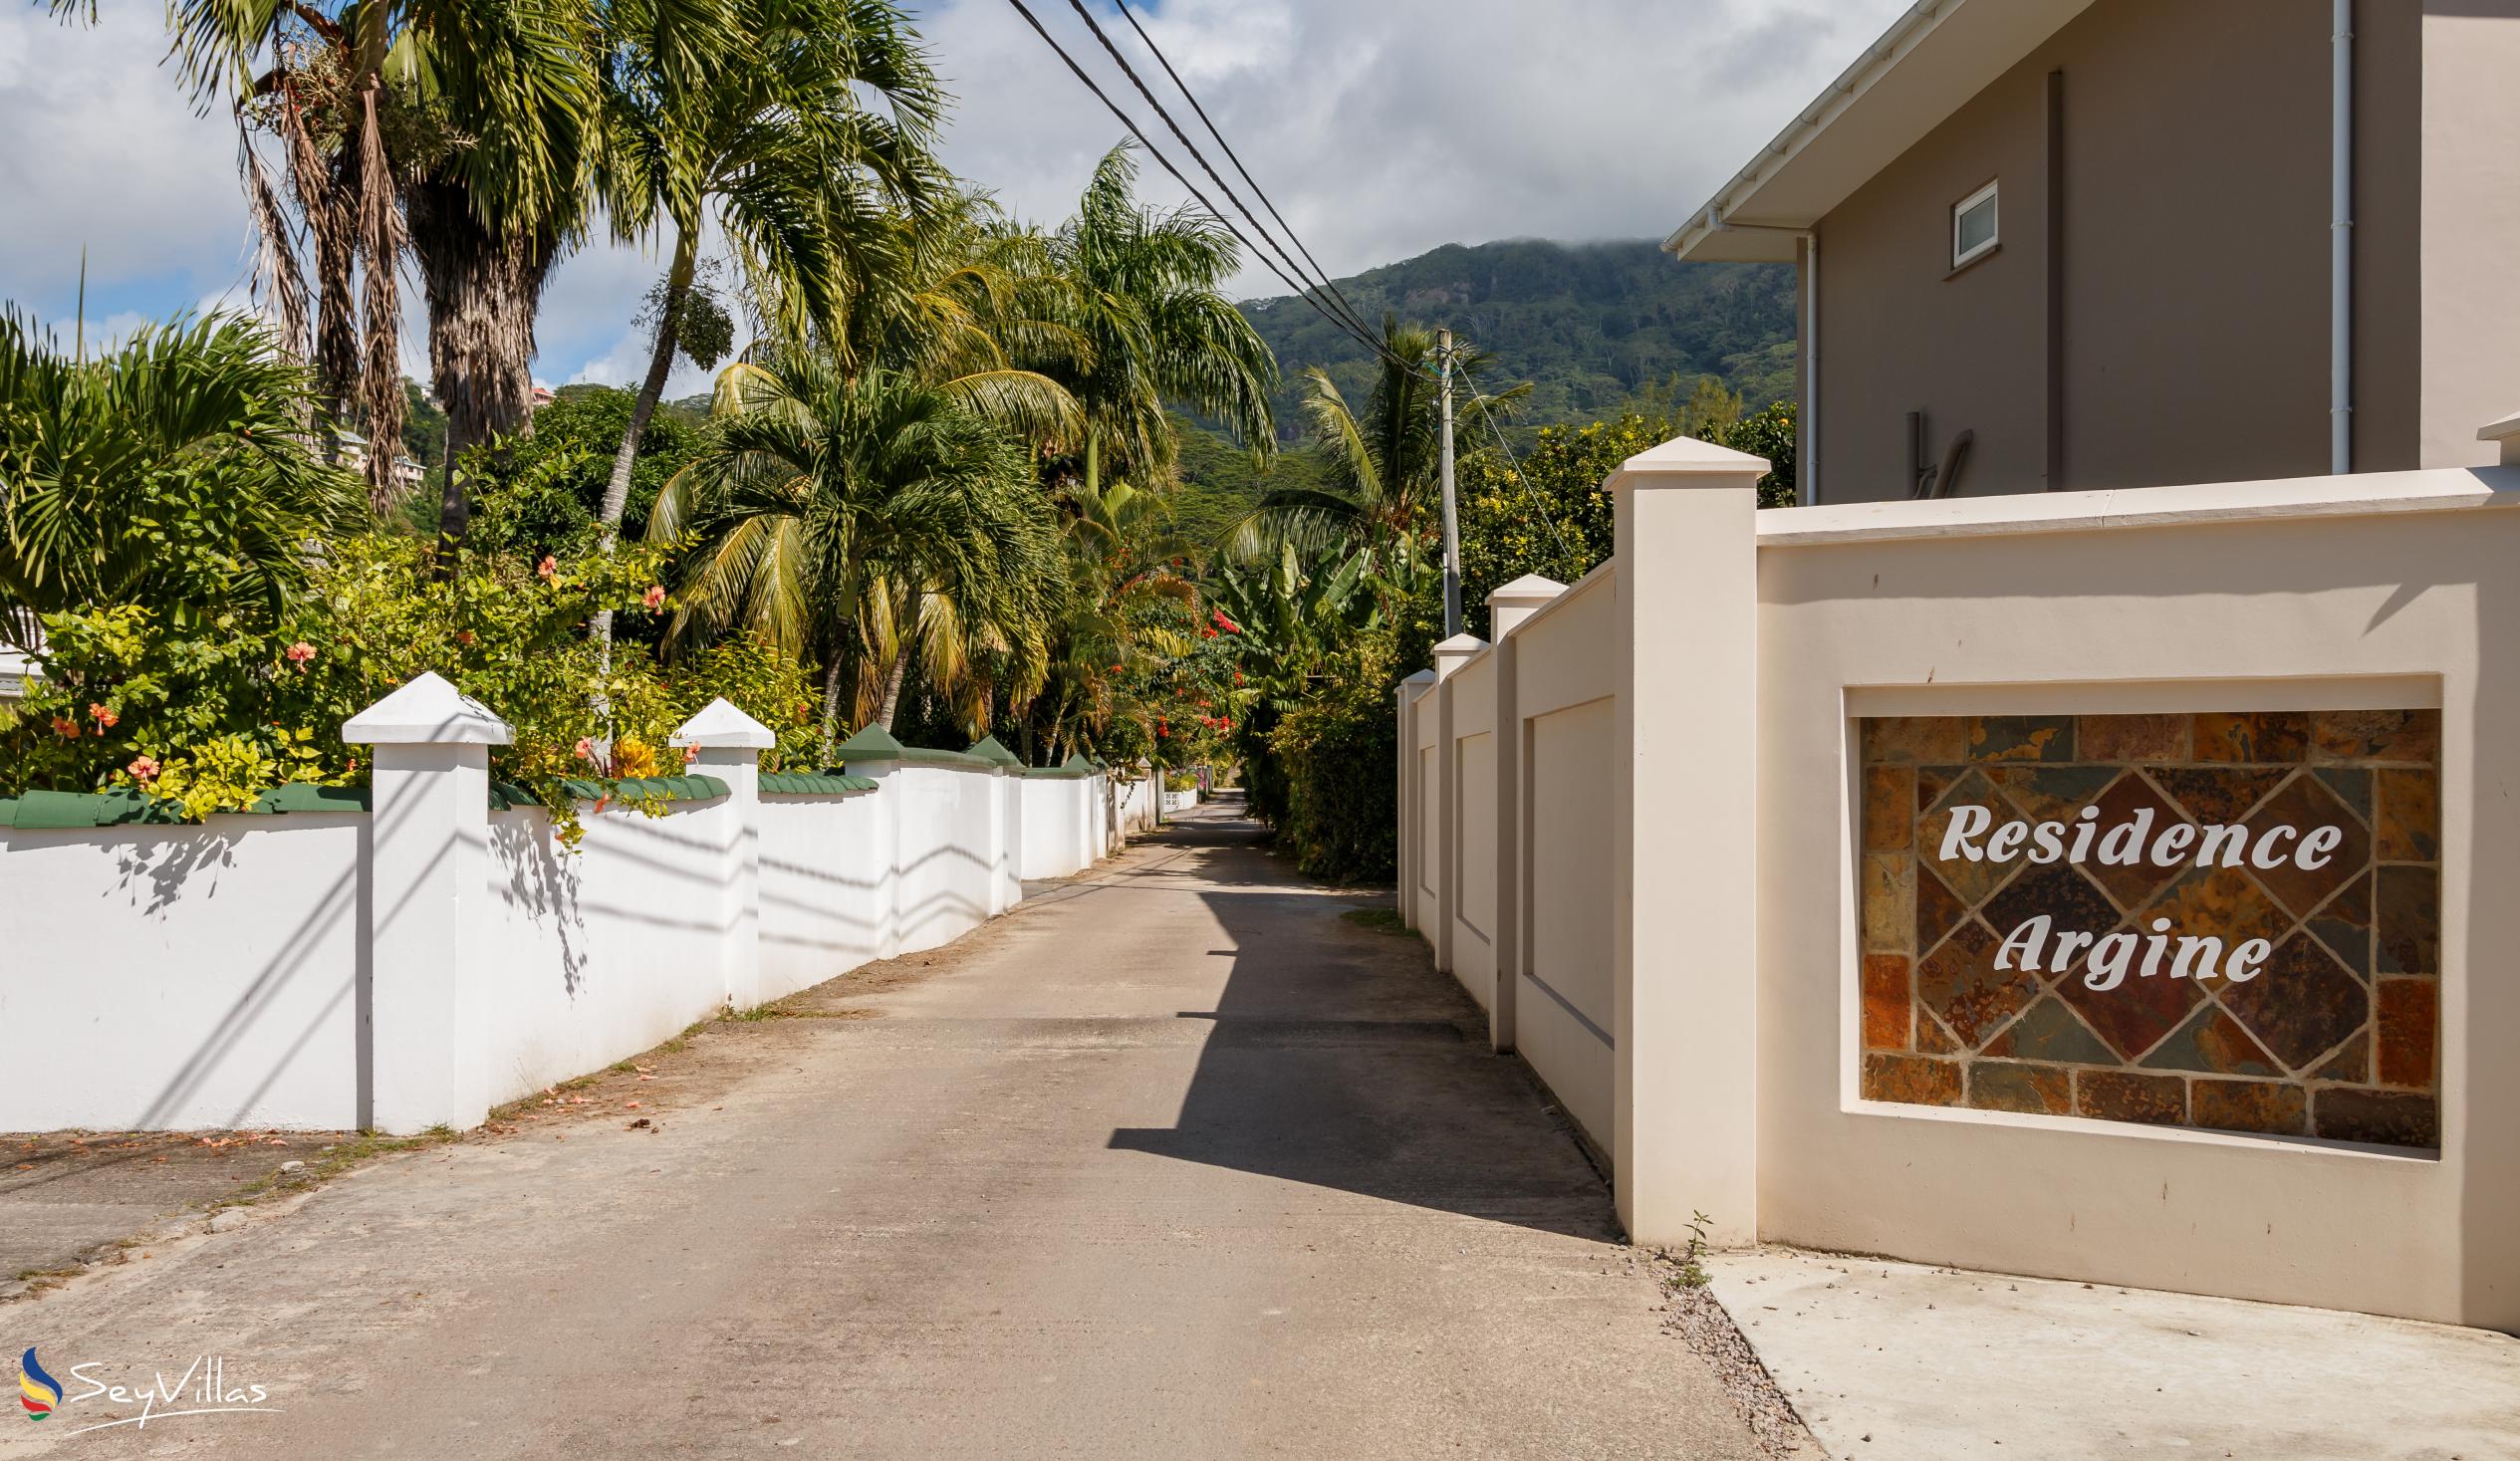 Foto 21: Residence Argine - Lage - Mahé (Seychellen)